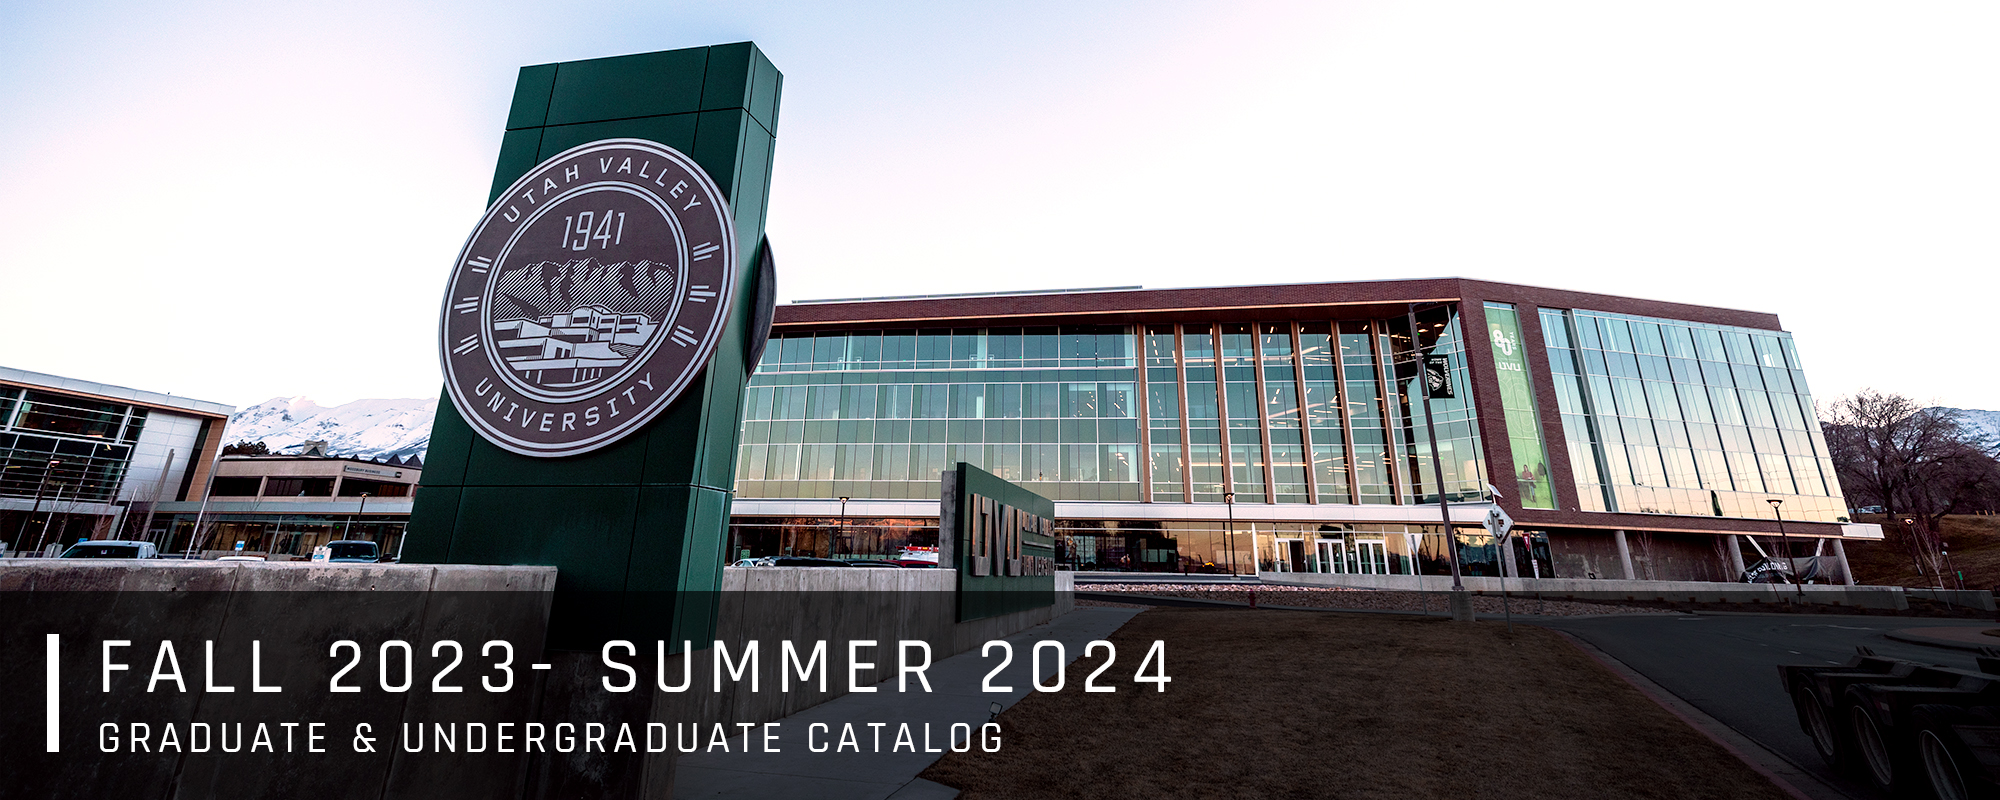 Fall 2023-Summer 2024 Graduate & Undergraduate Catalog